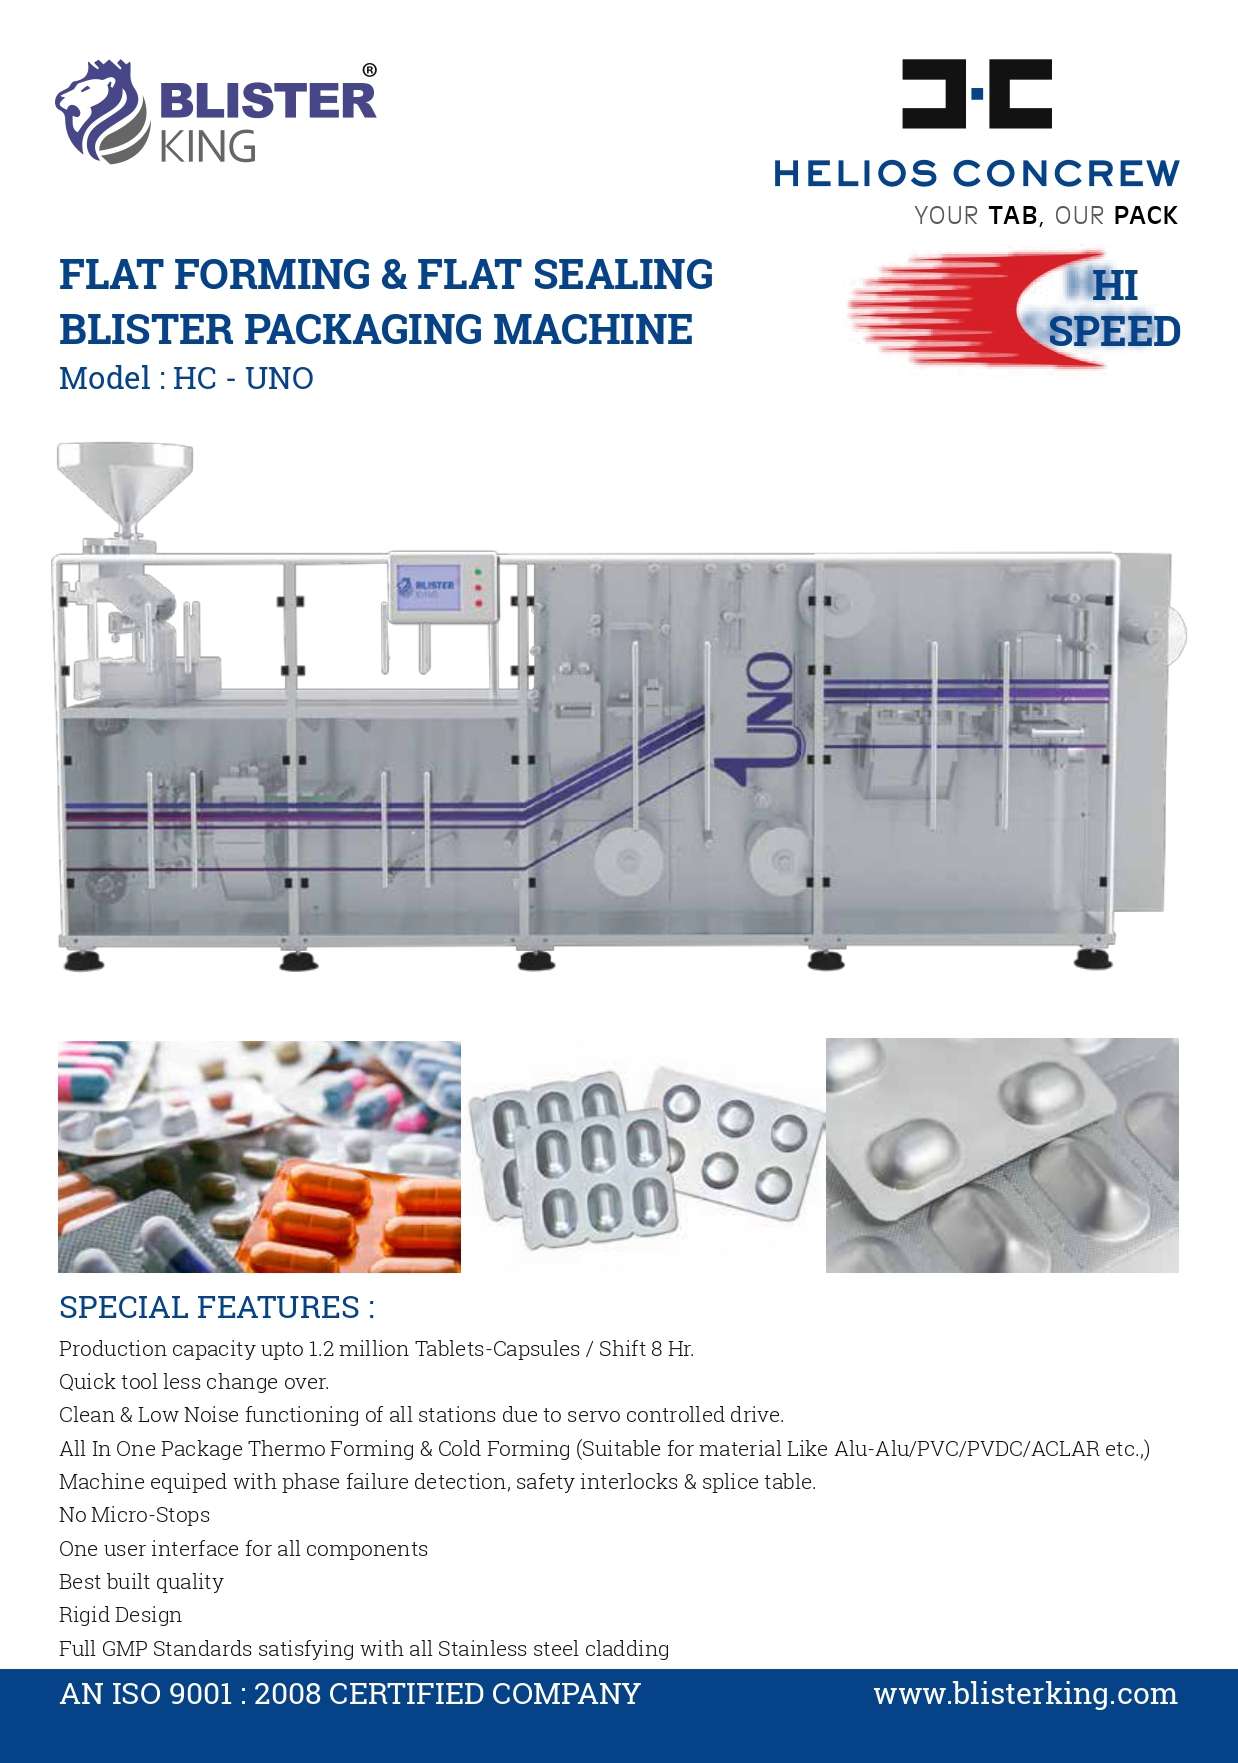 Fully Automatic Blister Packing Machine (ALU-ALU/PVC,PVDC-ALU MULTI TRACK)